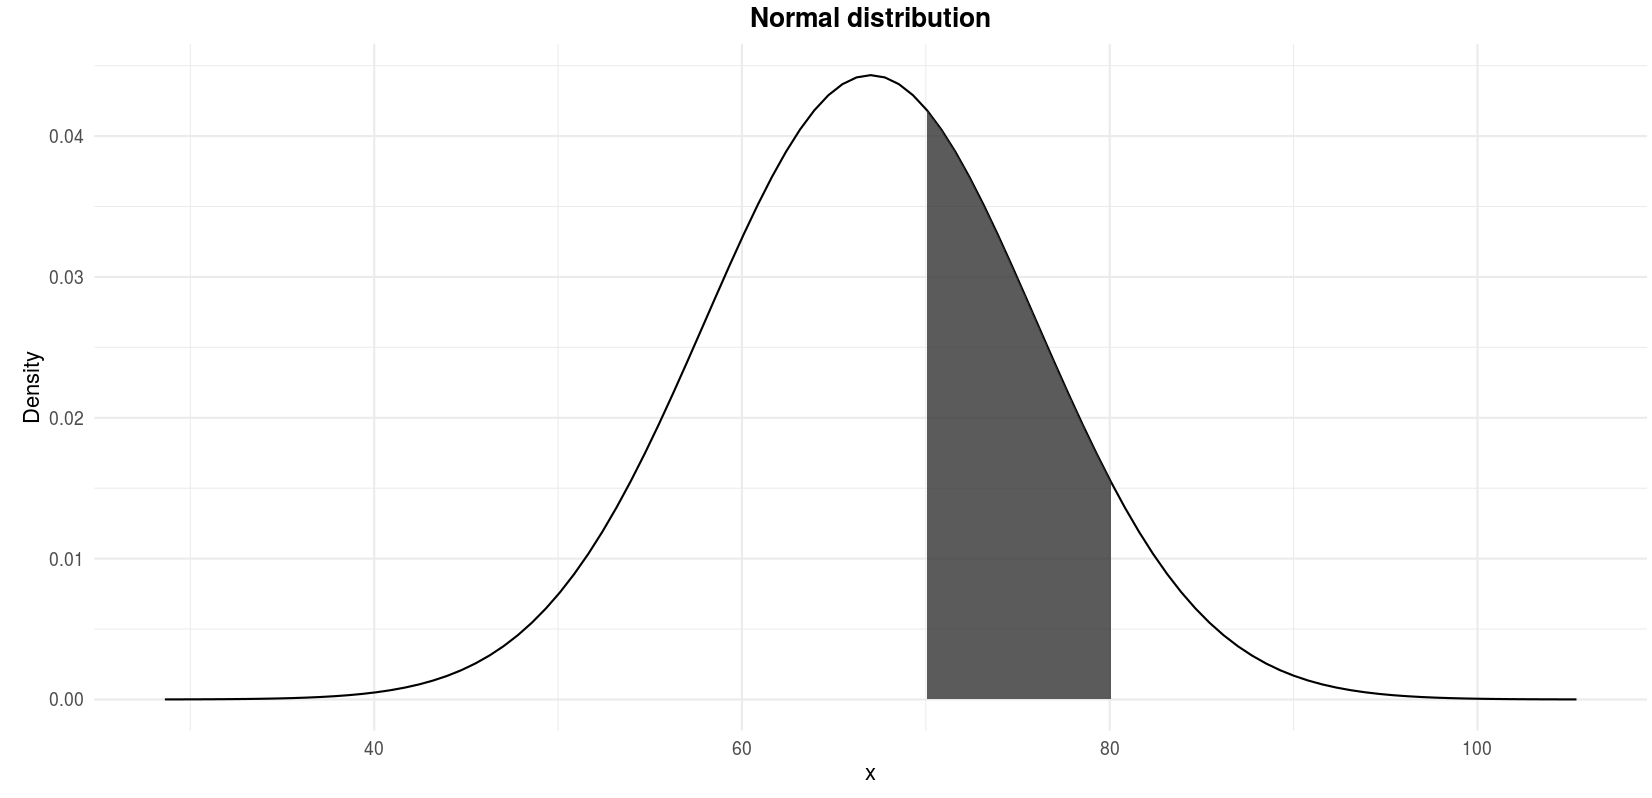 Do My Data Follow A Normal Distribution By Antoine Soetewey Towards Data Science